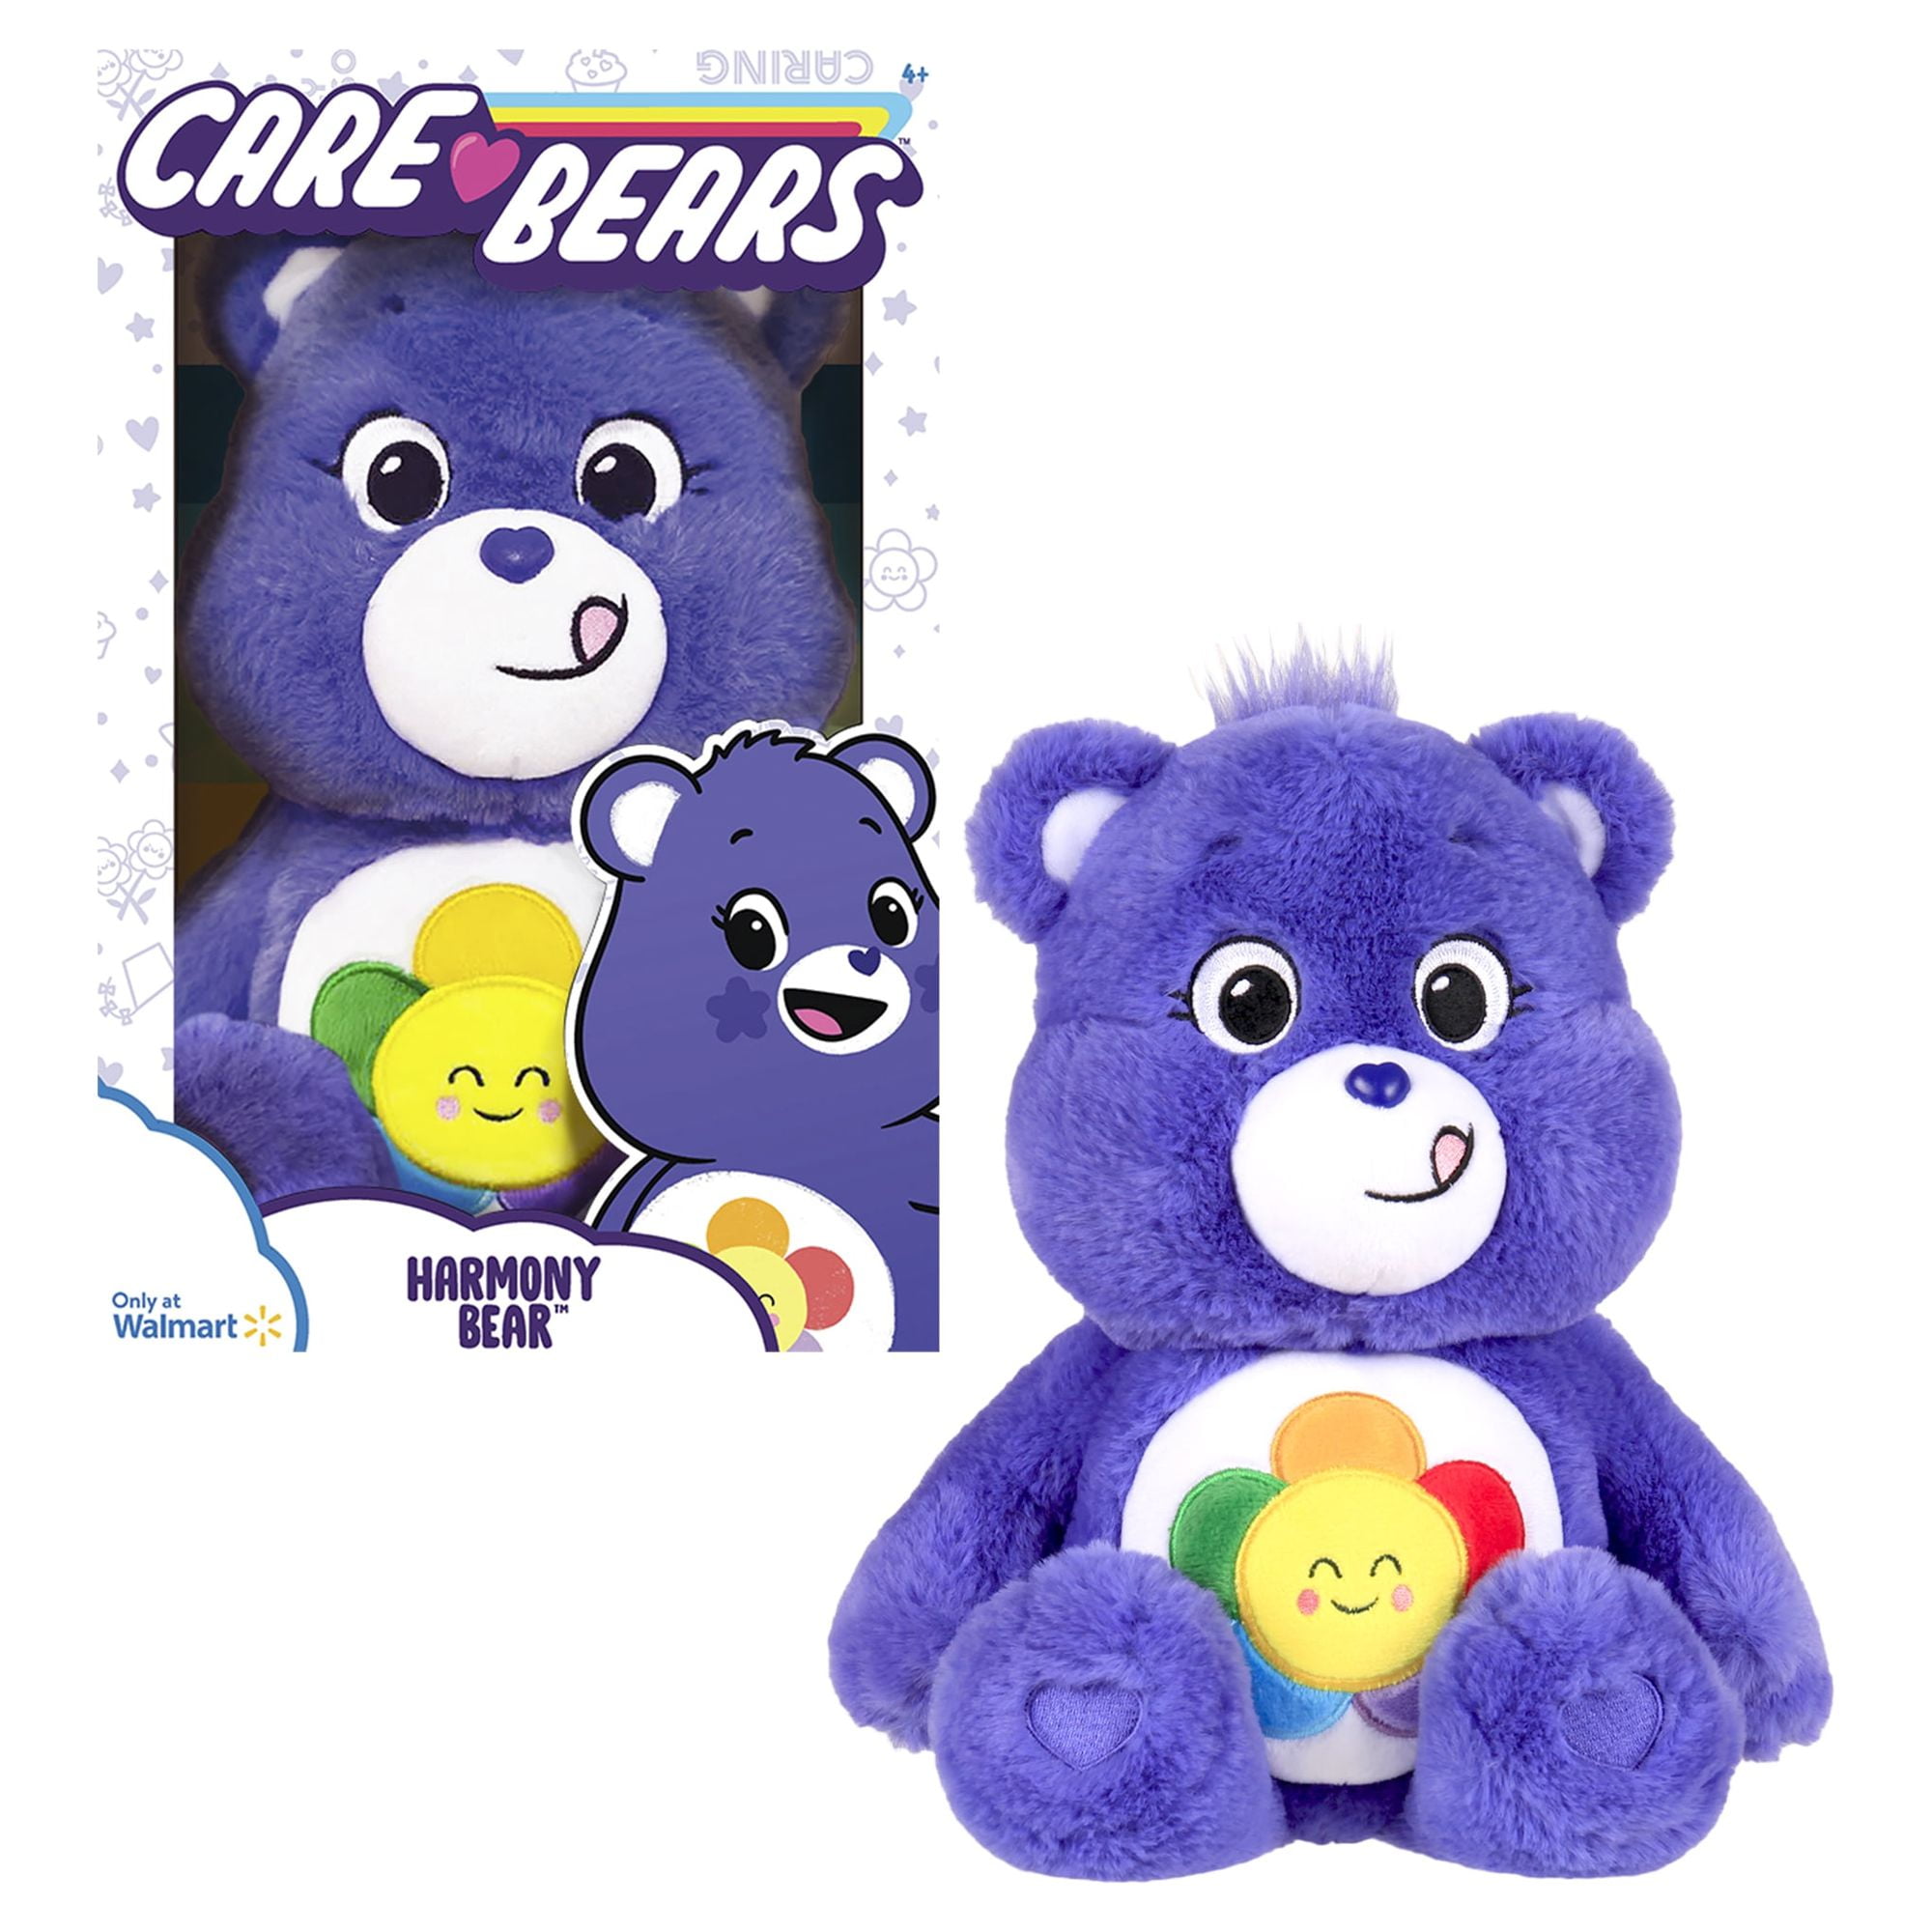 Care Bears 14 Plush - Share Bear - Soft Huggable Material!